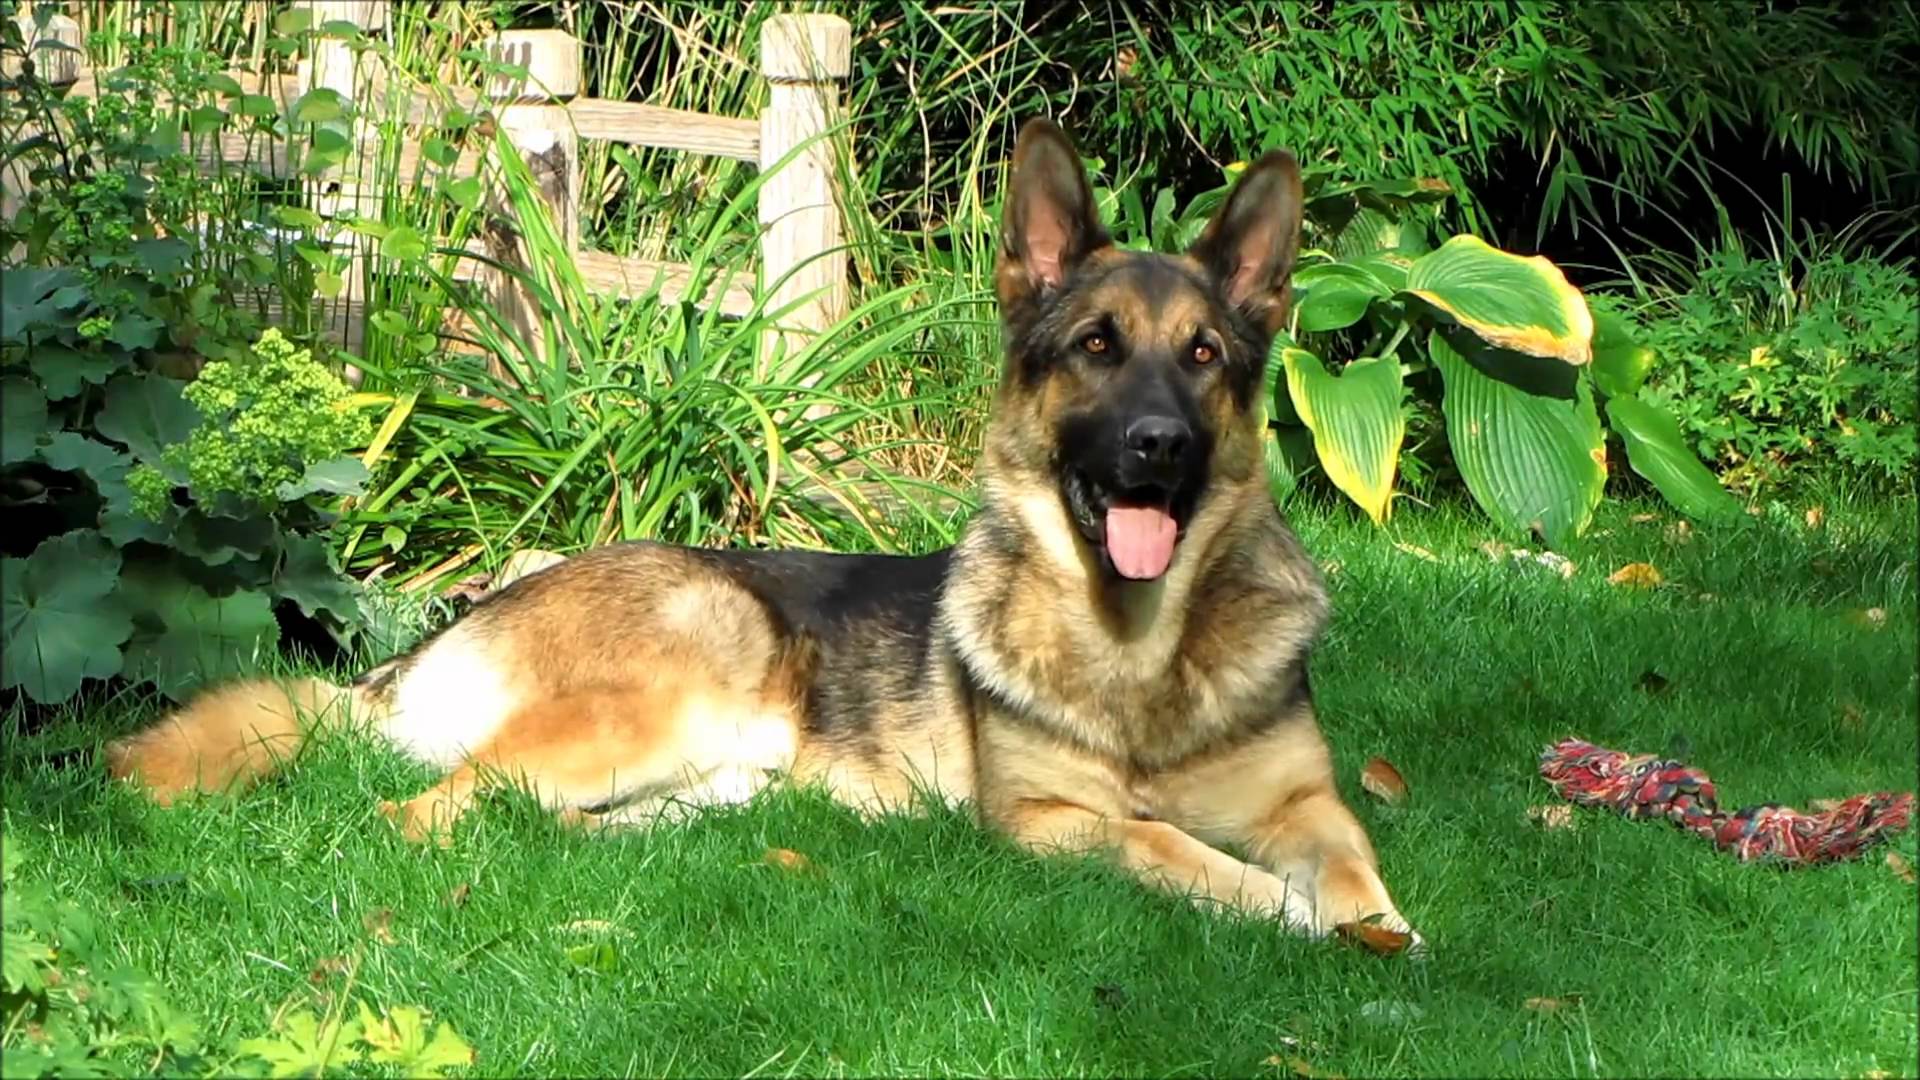 Nero, beautiful german shepherd, Full-HD.wmv - YouTube